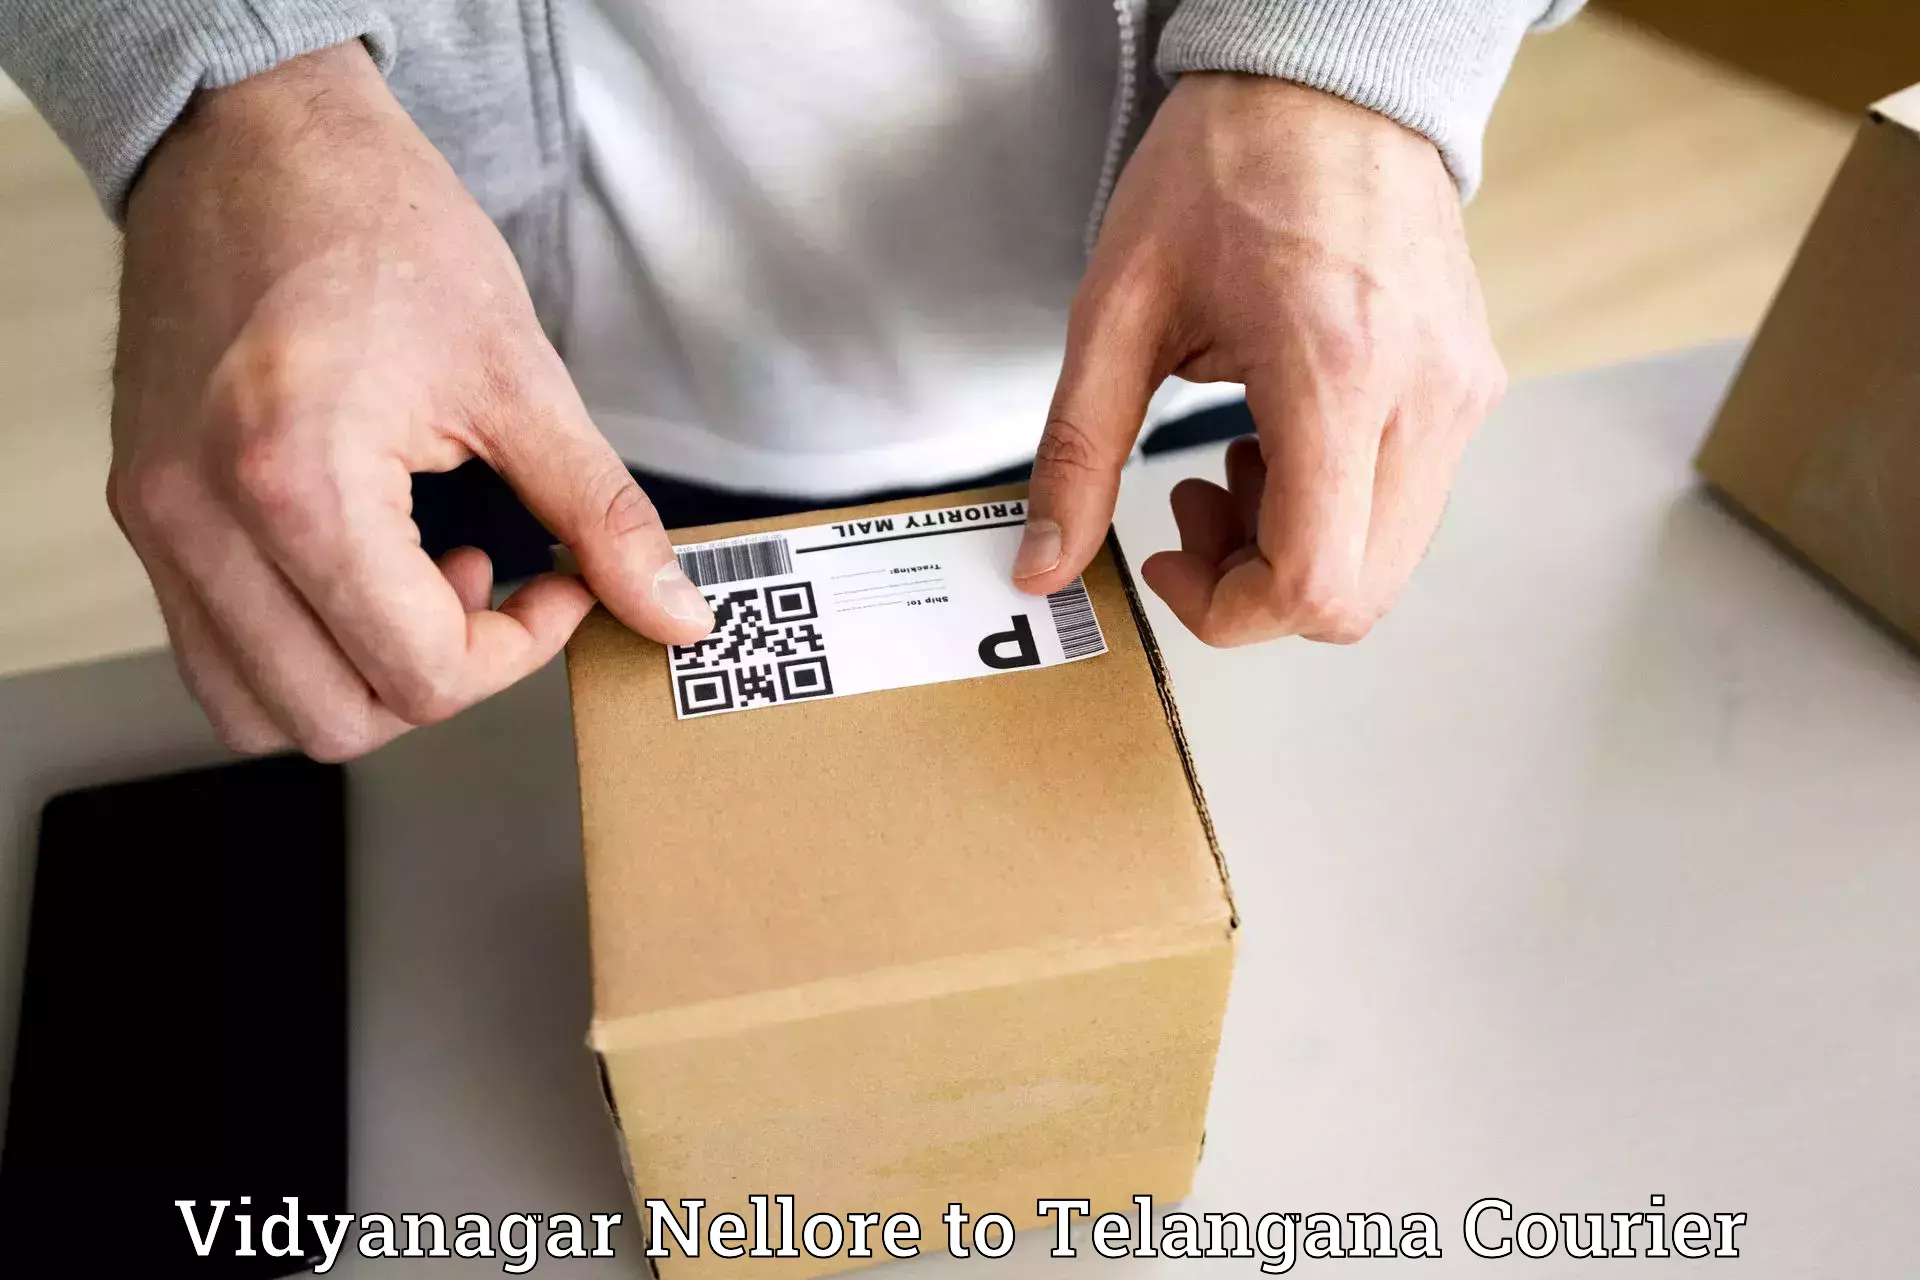 Affordable parcel service Vidyanagar Nellore to Telangana